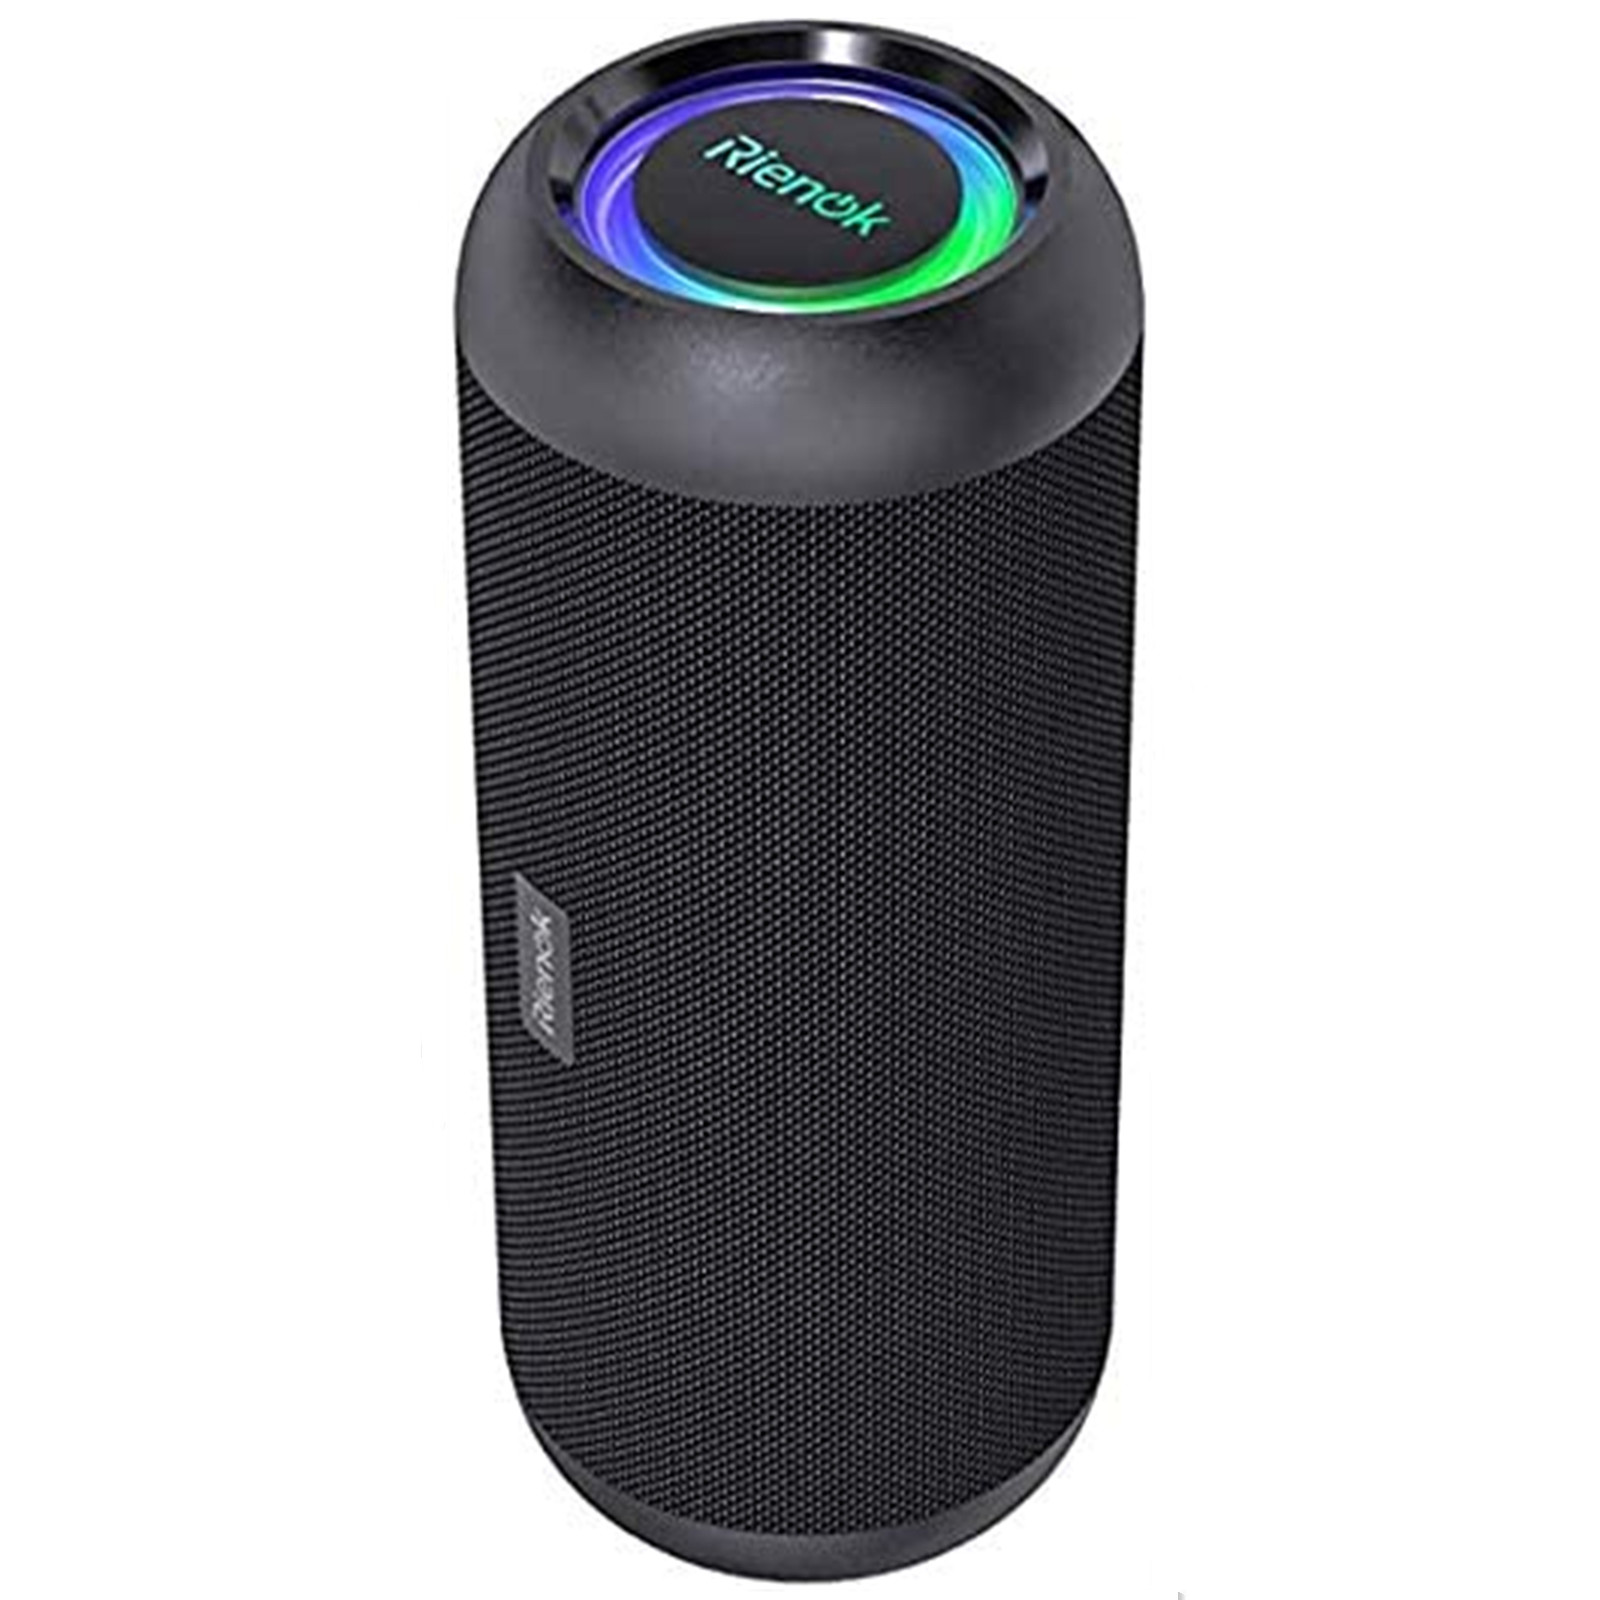 Wireless Portable Speaker TWS Stereo Sound Bluetooth 5.0 Waterproof IP67 HD Sound Extra Bass LED Light for Phone Black – Rienok